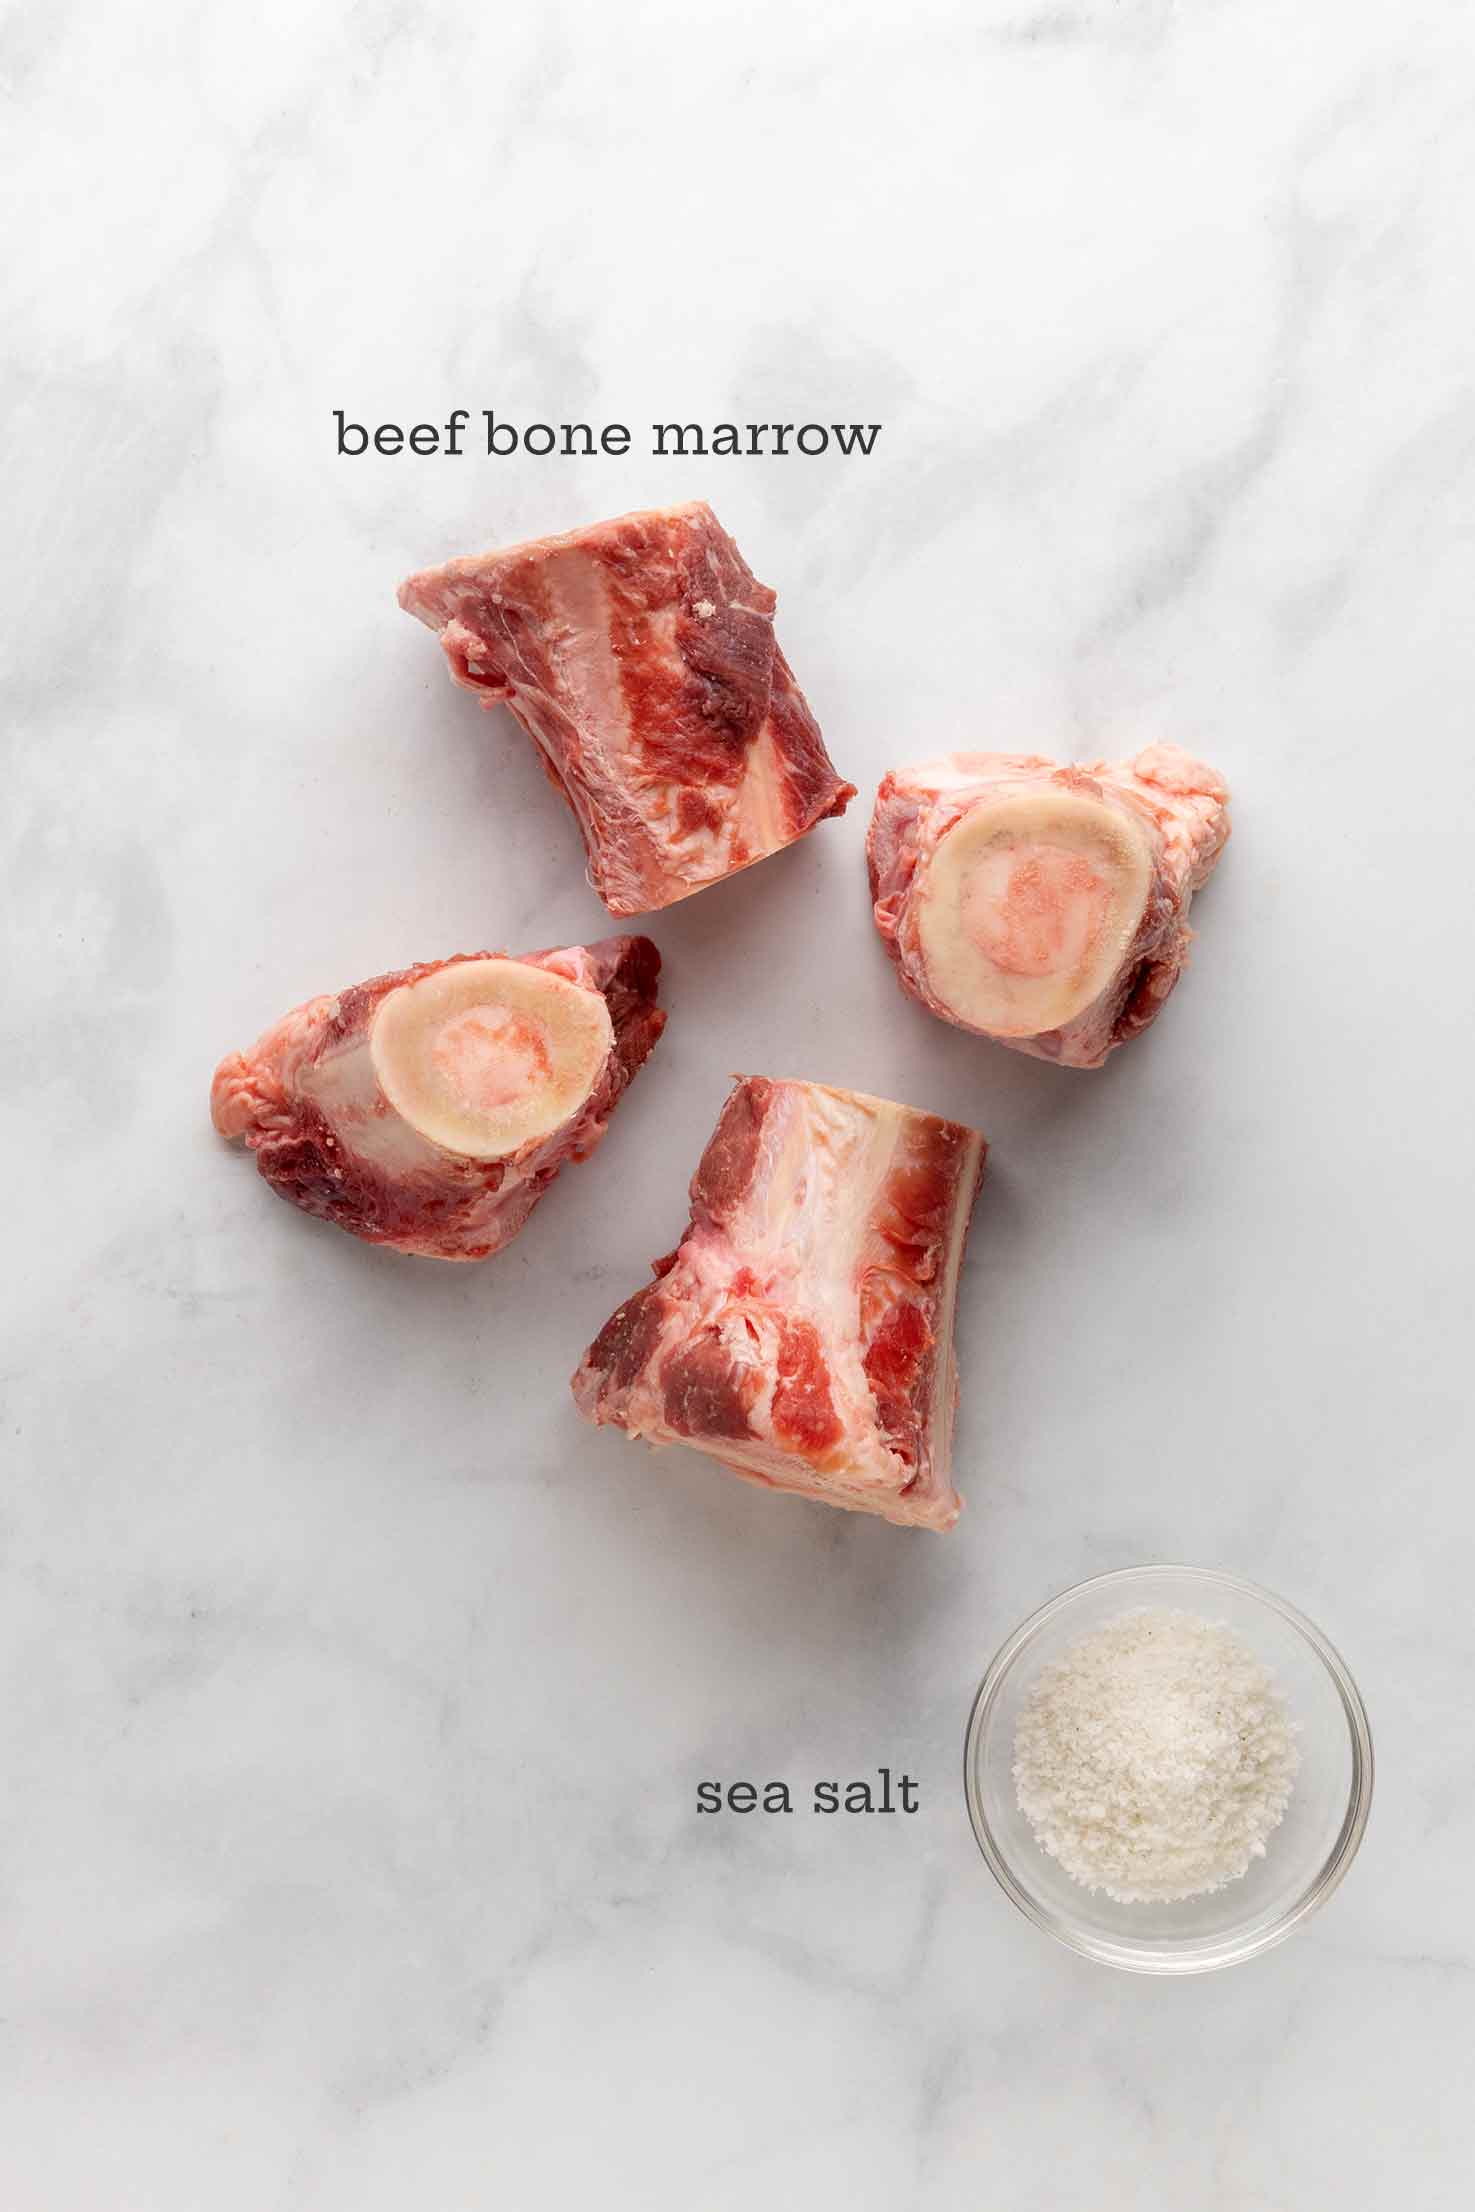 Ingredients for roasted bone marrow--beef bone marrow and sea salt.